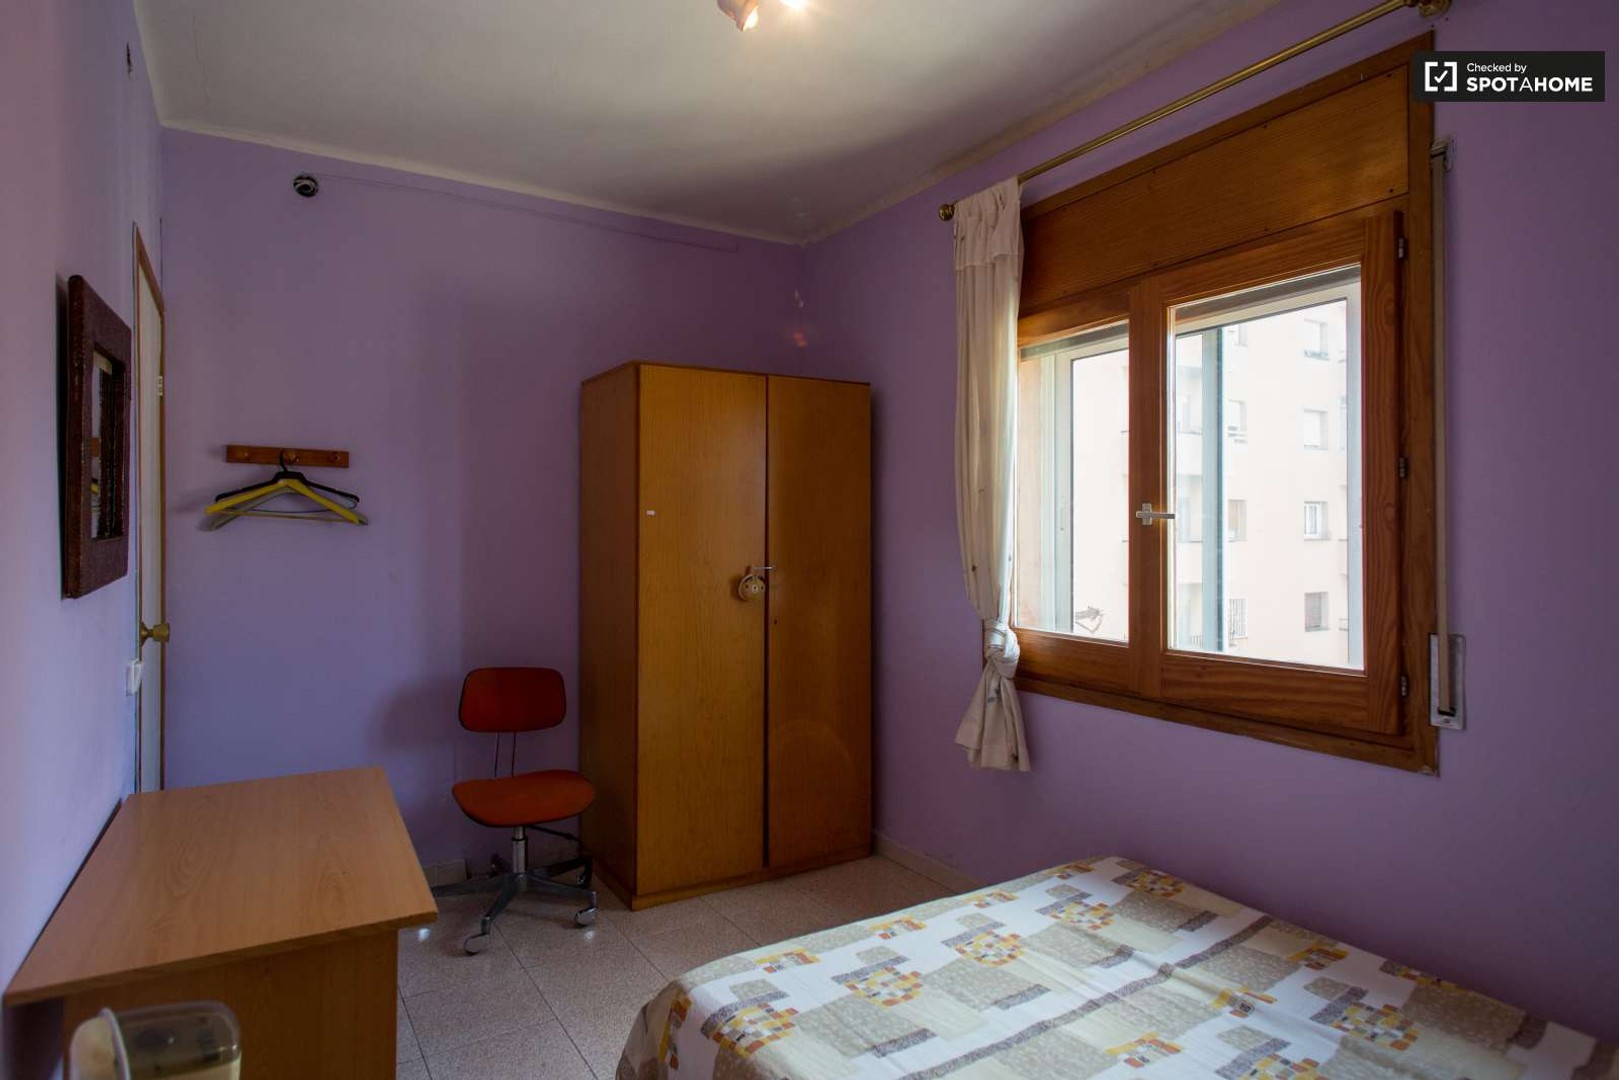 Cheap private room in barcelona